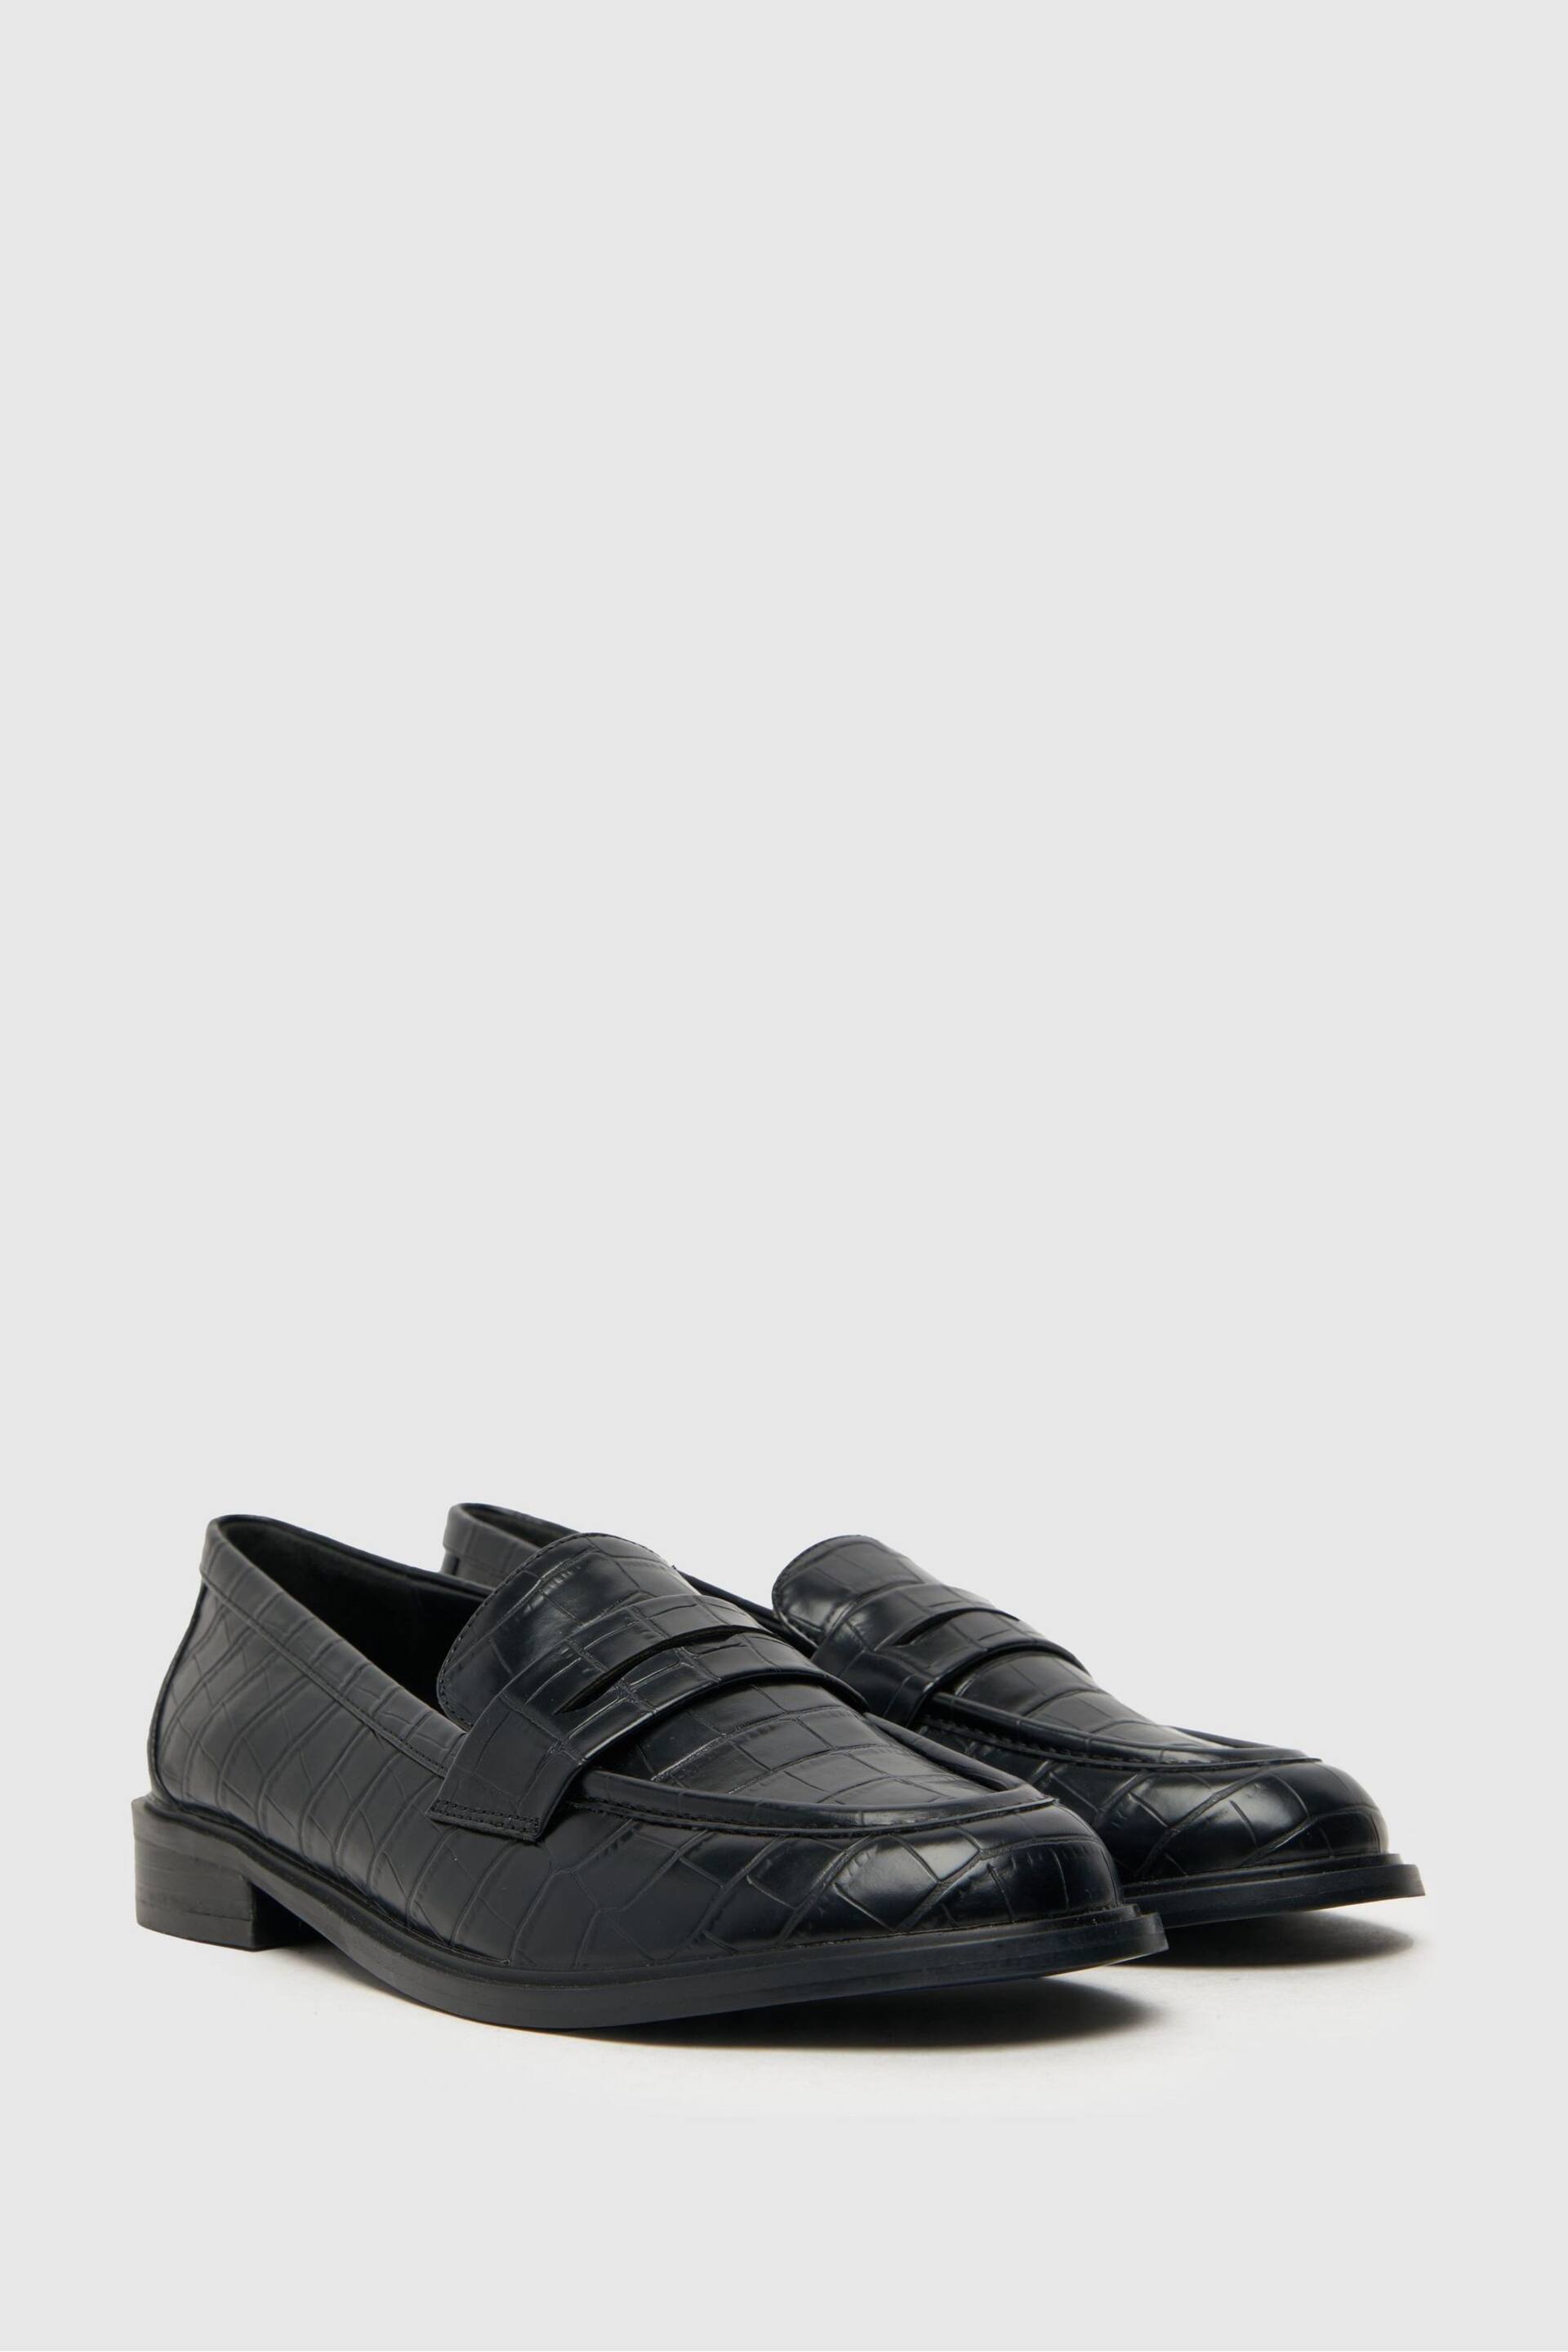 Schuh Lexa Croc-Effect Black Loafers - Image 2 of 4